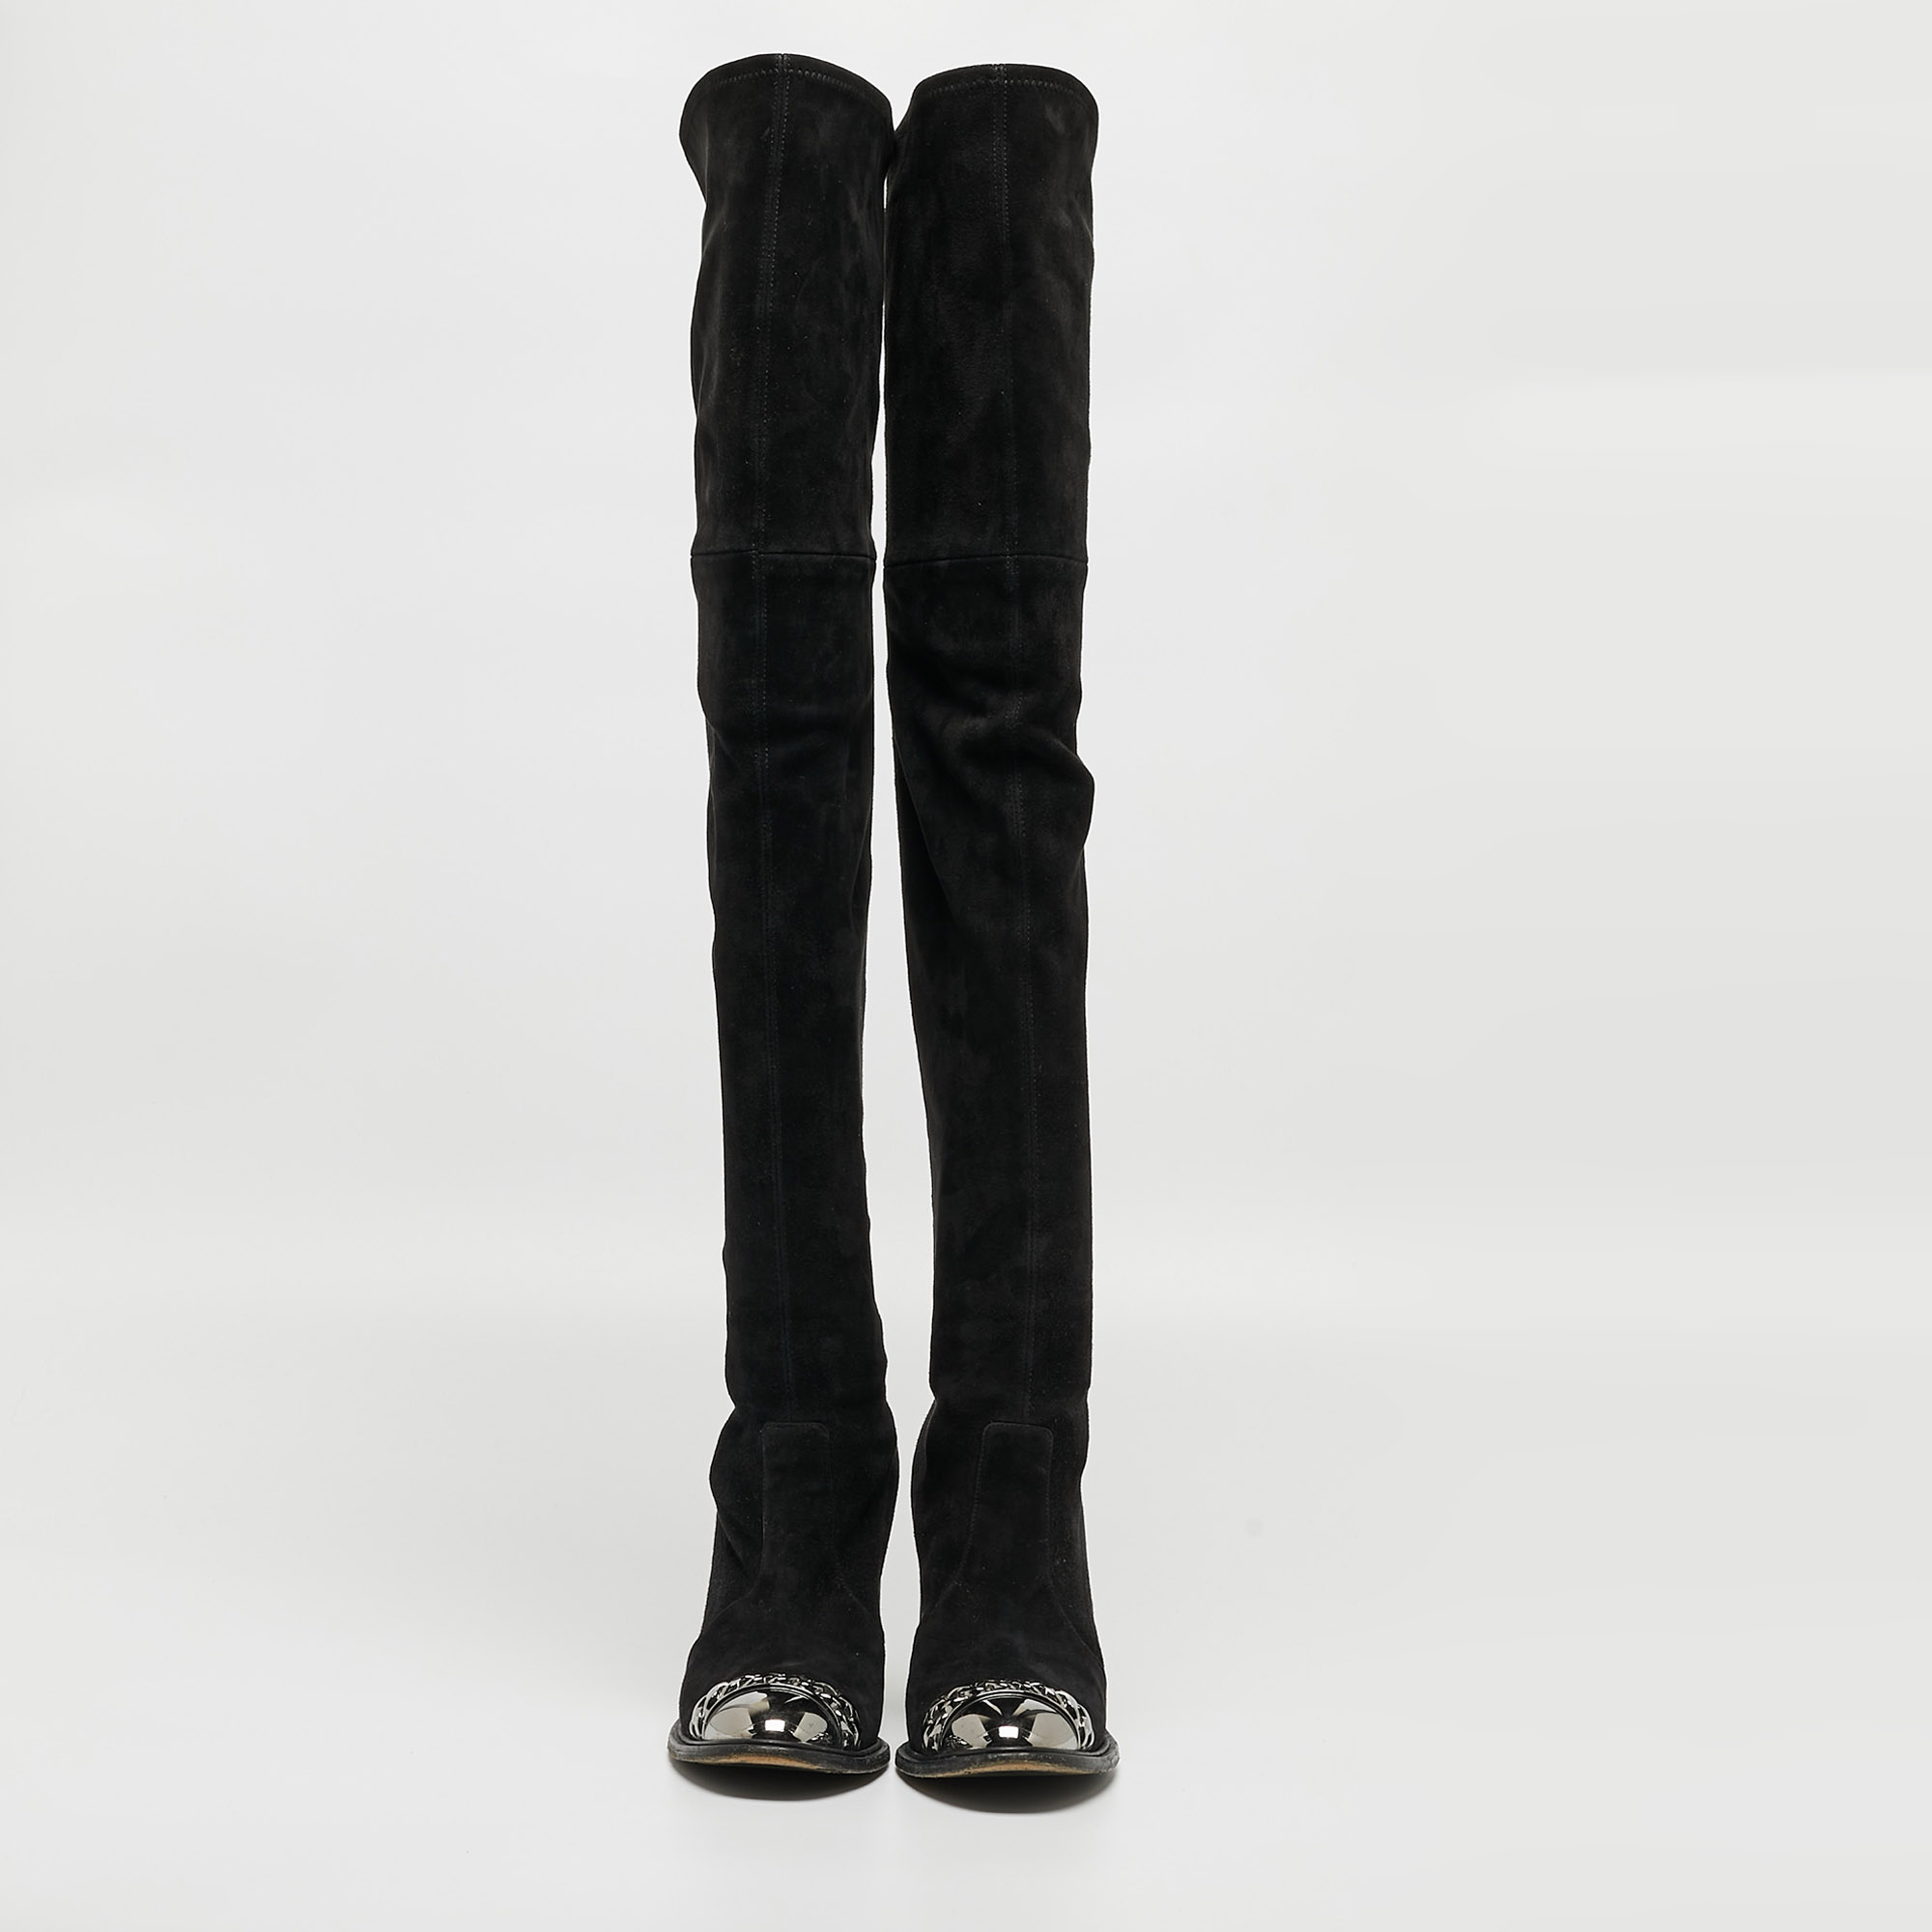 Casadei Black Suede Embellished Metal Toe Cap Knee Length Boots Size 37.5